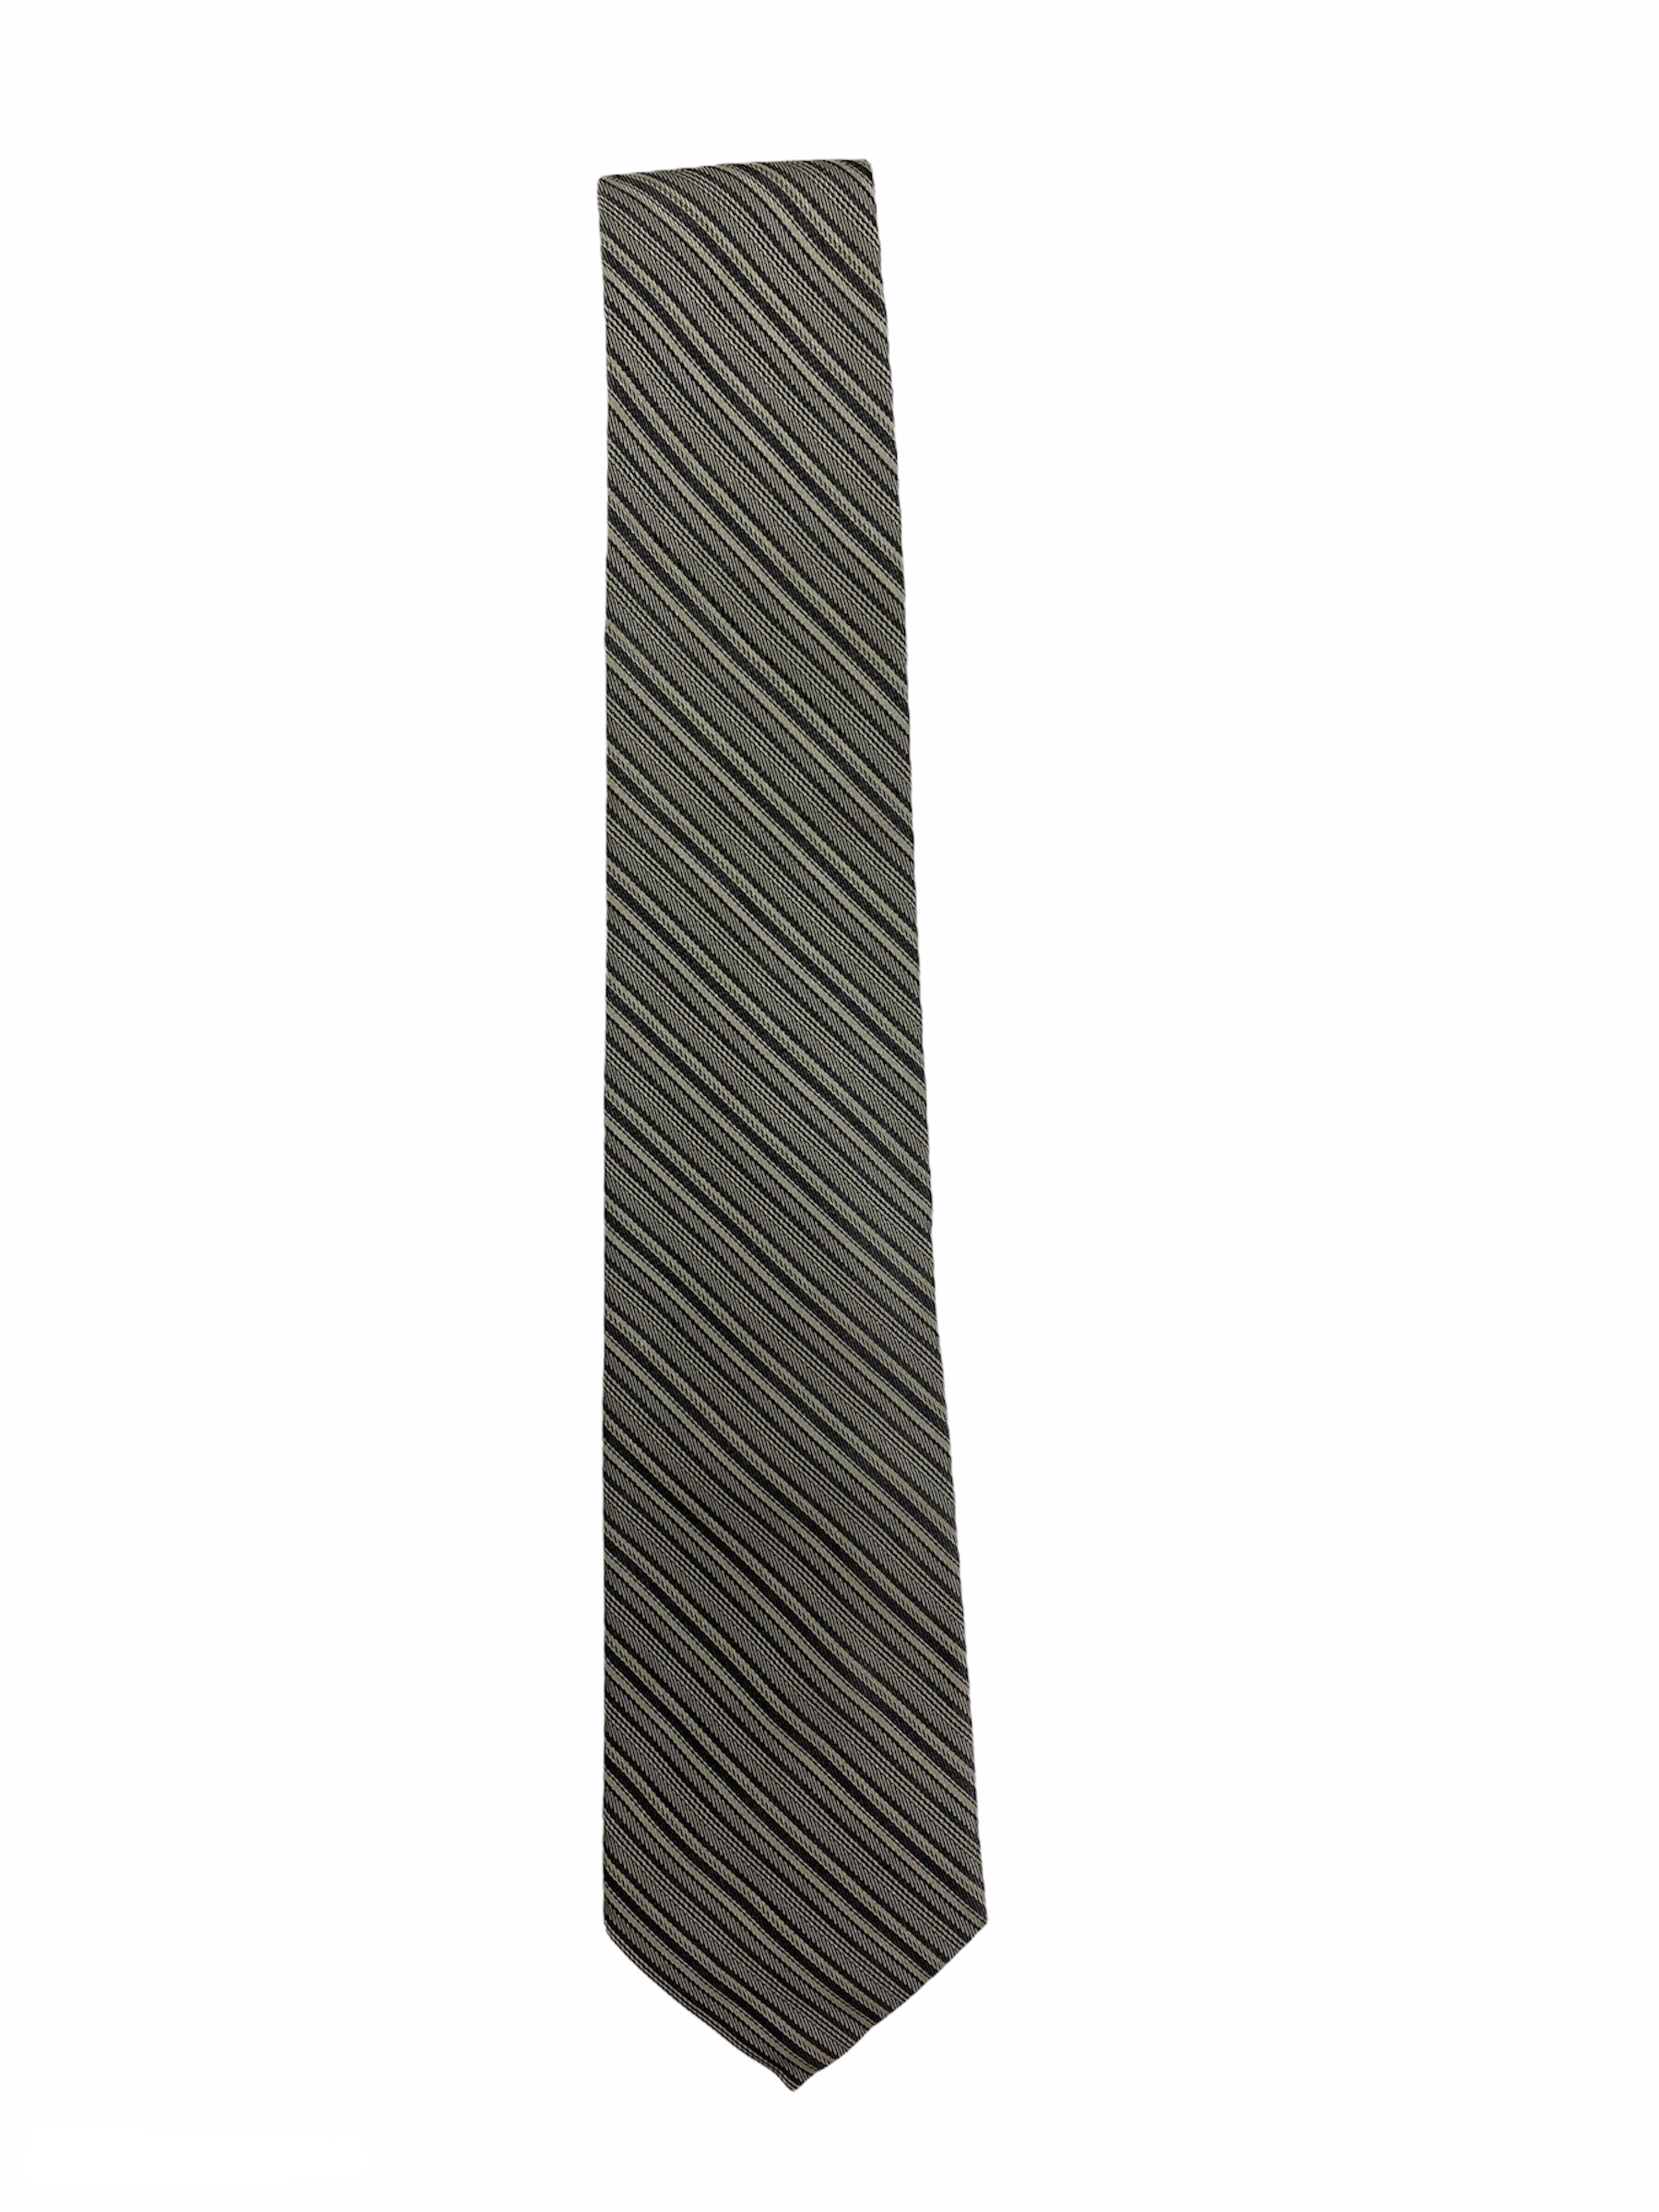 Cravate Ermenegildo Zegna 100% soie, gris à rayures.